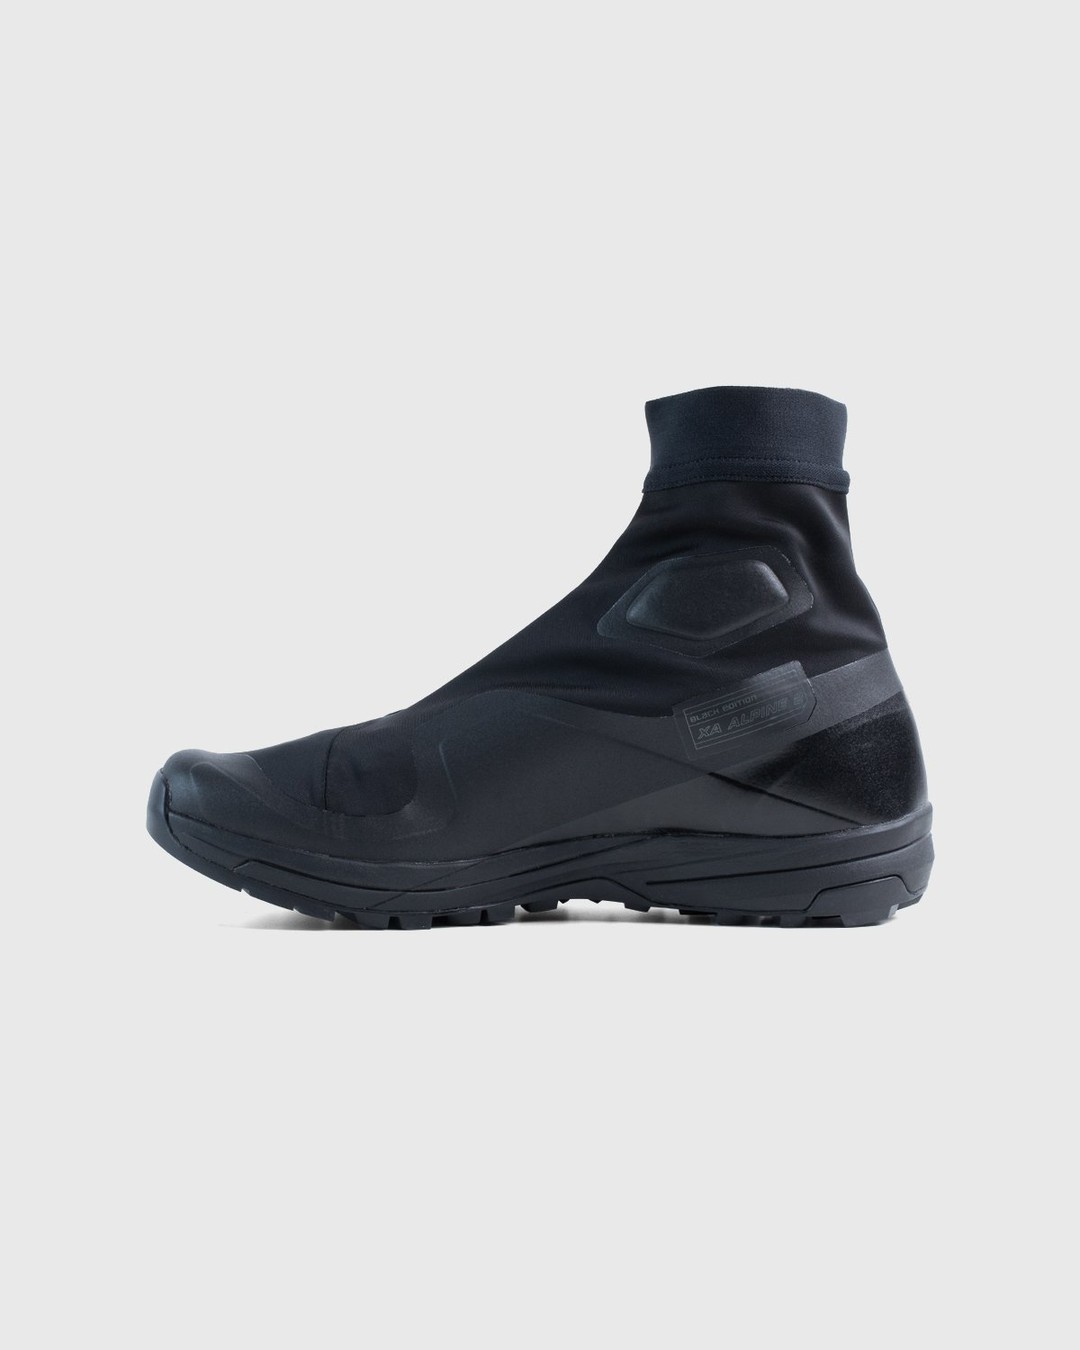 Salomon – S/Lab XA-Alpine 2 Limited Edition Black - Sneakers - Black - Image 6